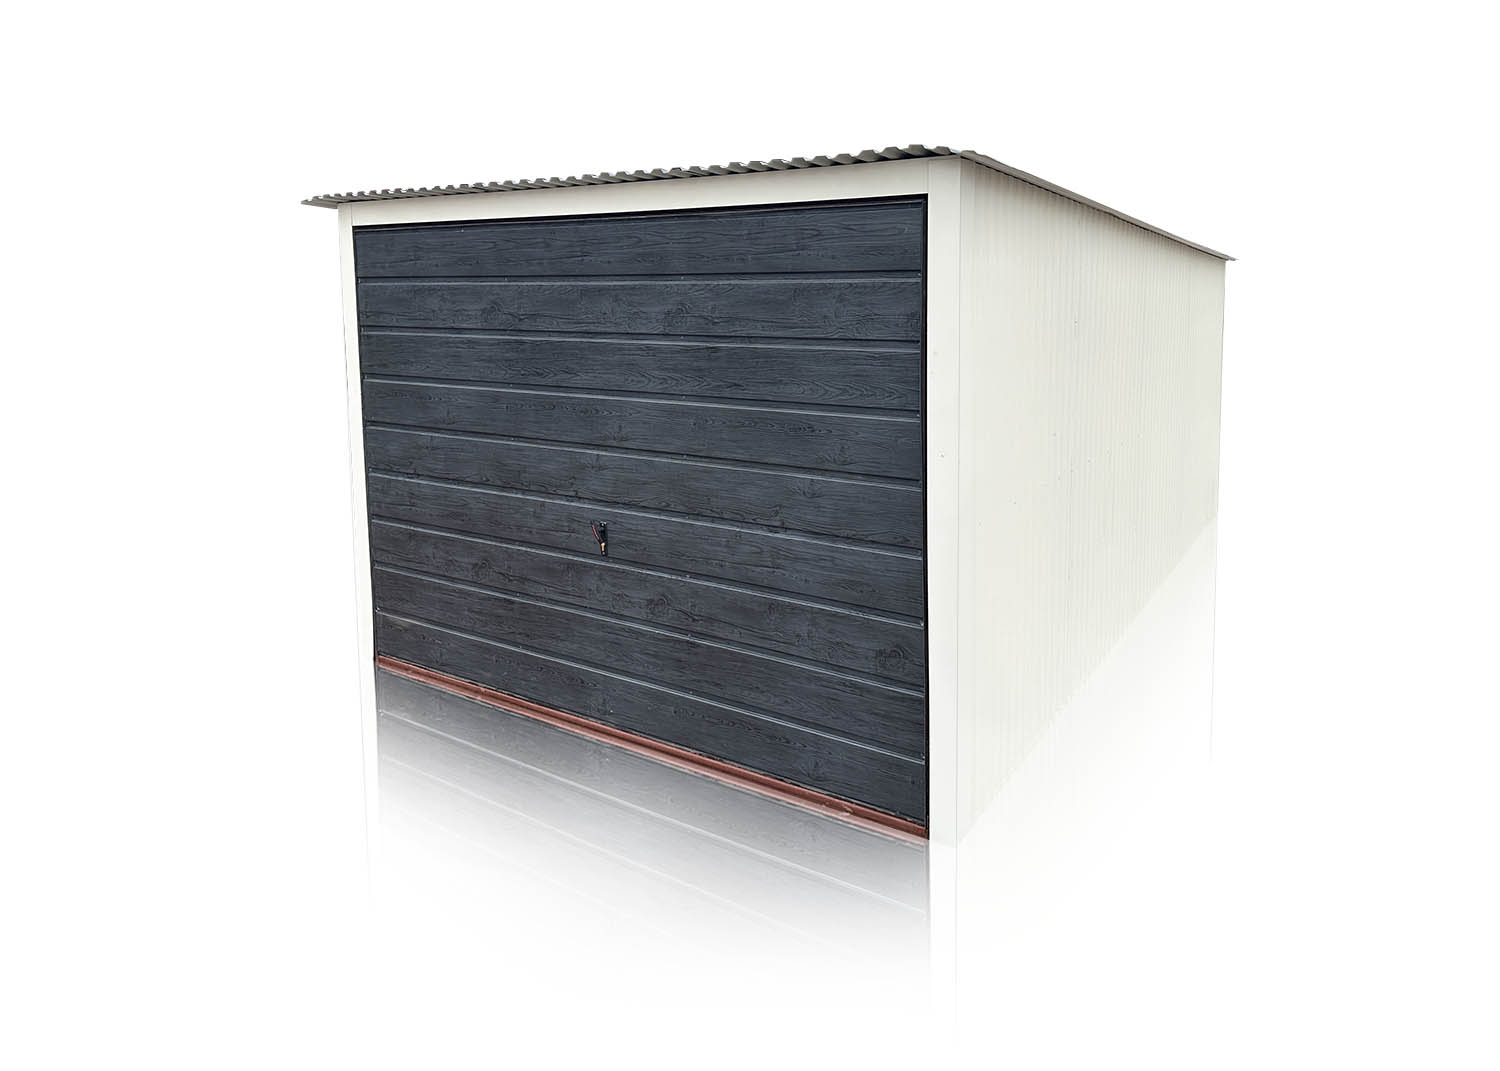 Plechová garáž 3x5m, biela matná, brána grafit – štruktúra dreva